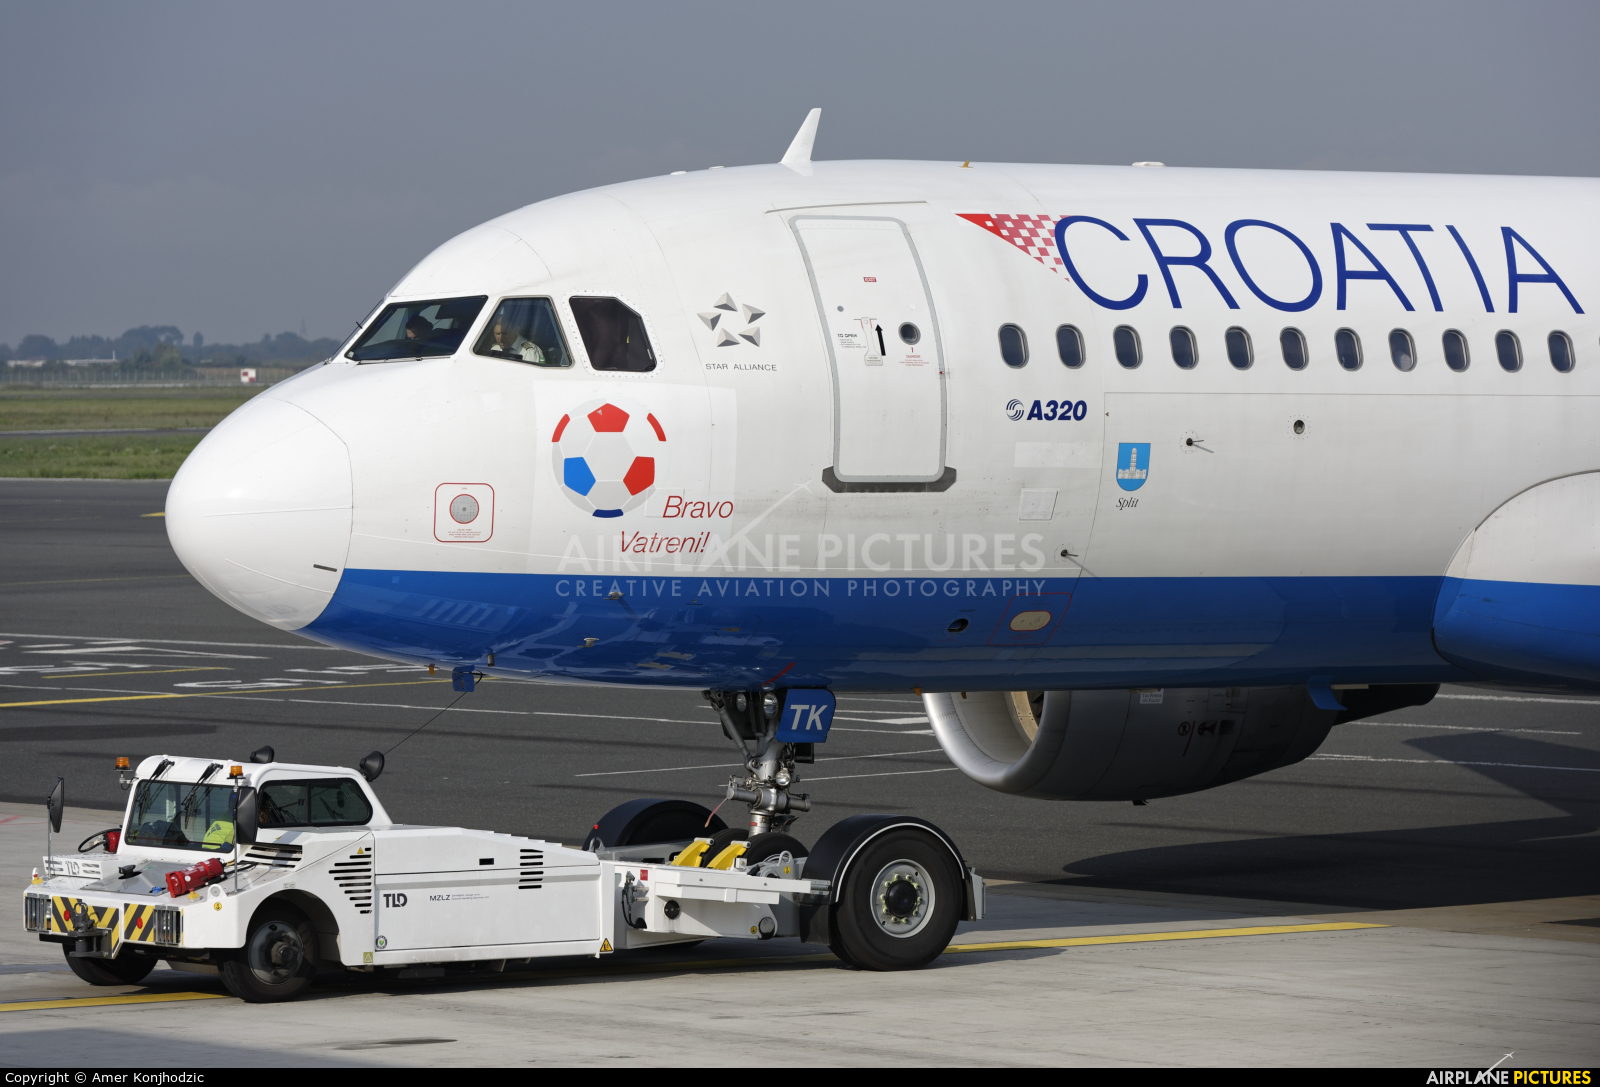 Croatia Airlines 9A-CTK aircraft at Zagreb